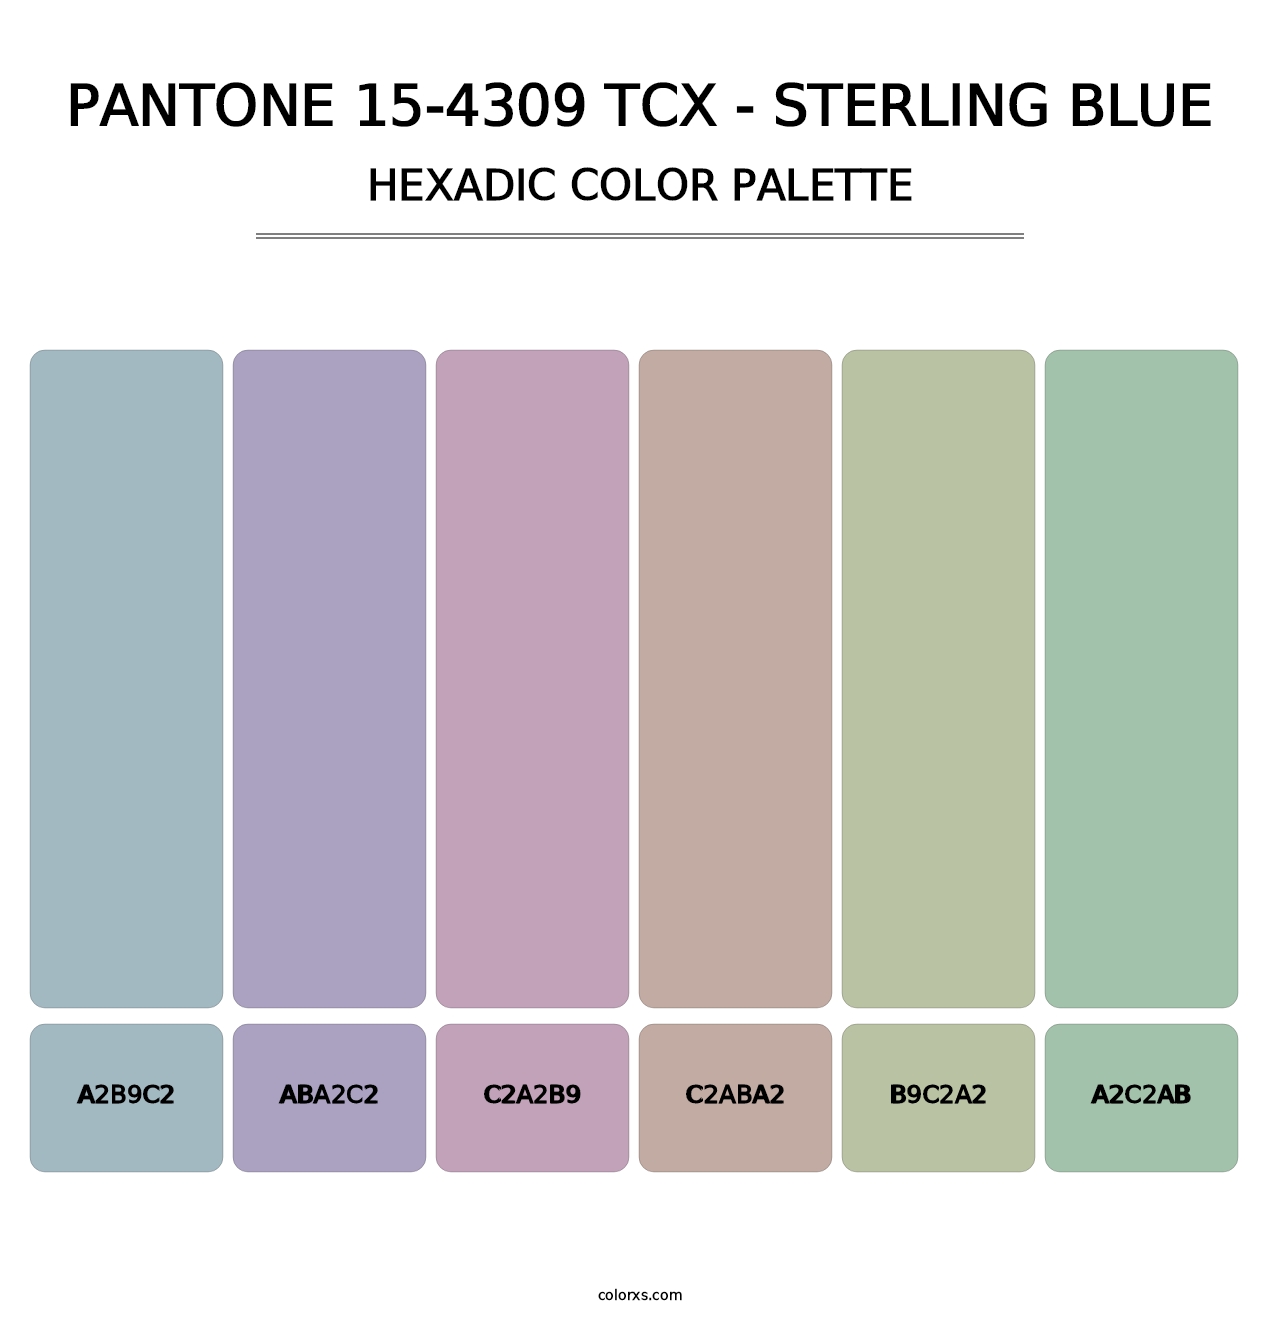 PANTONE 15-4309 TCX - Sterling Blue - Hexadic Color Palette